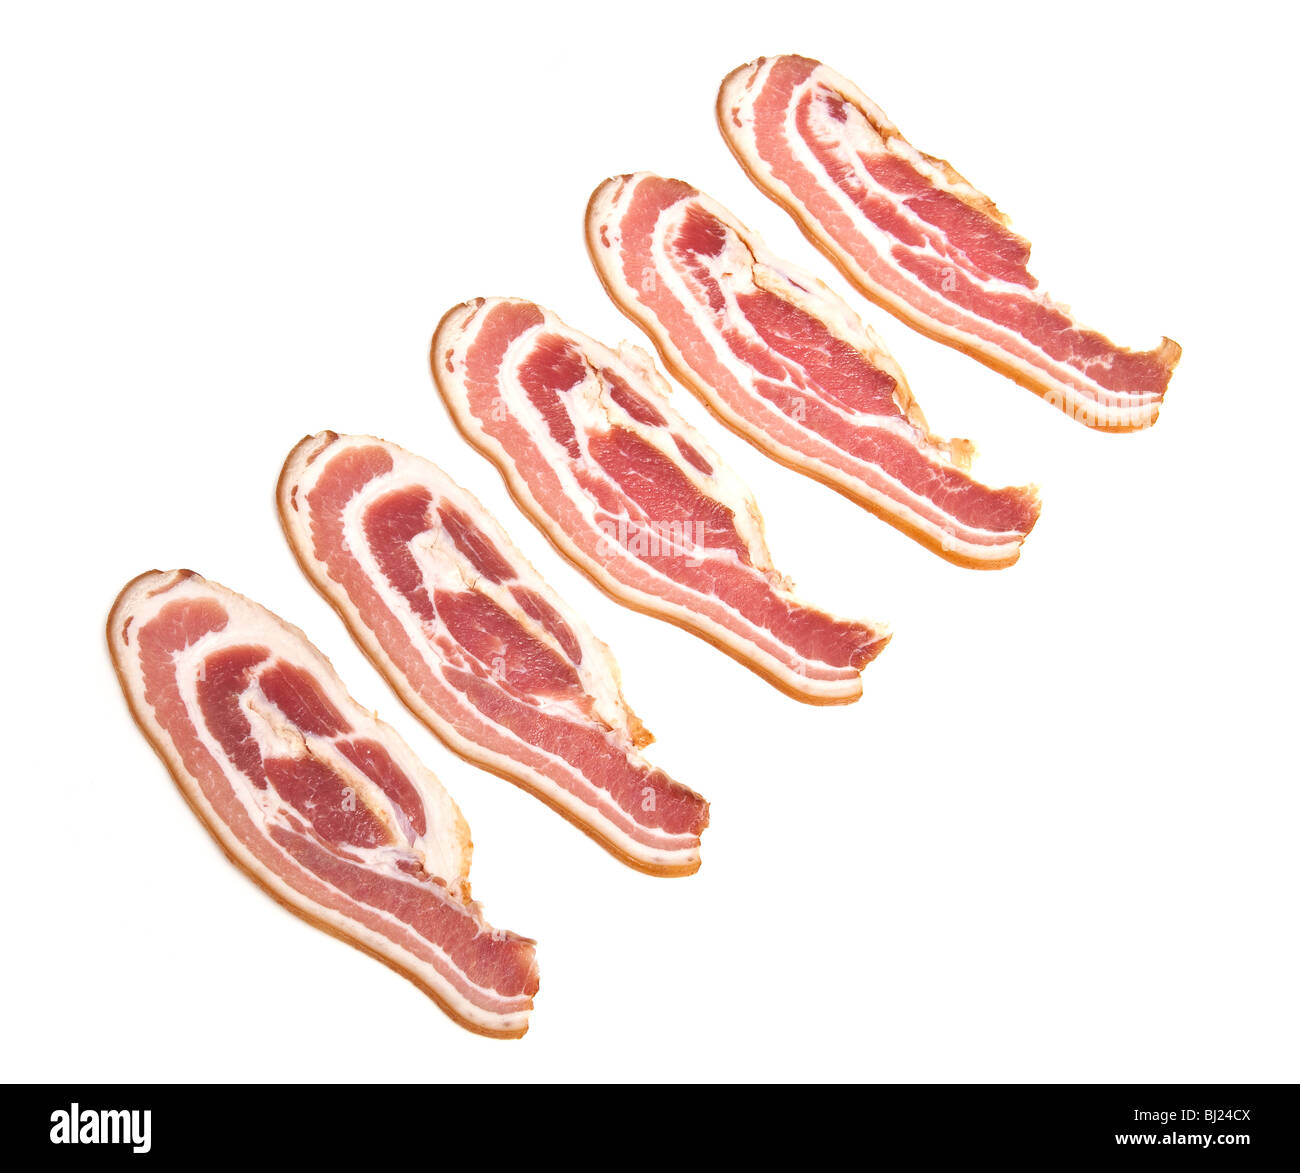 Streaky bacon rashers isolated on a white studio background Stock Photo